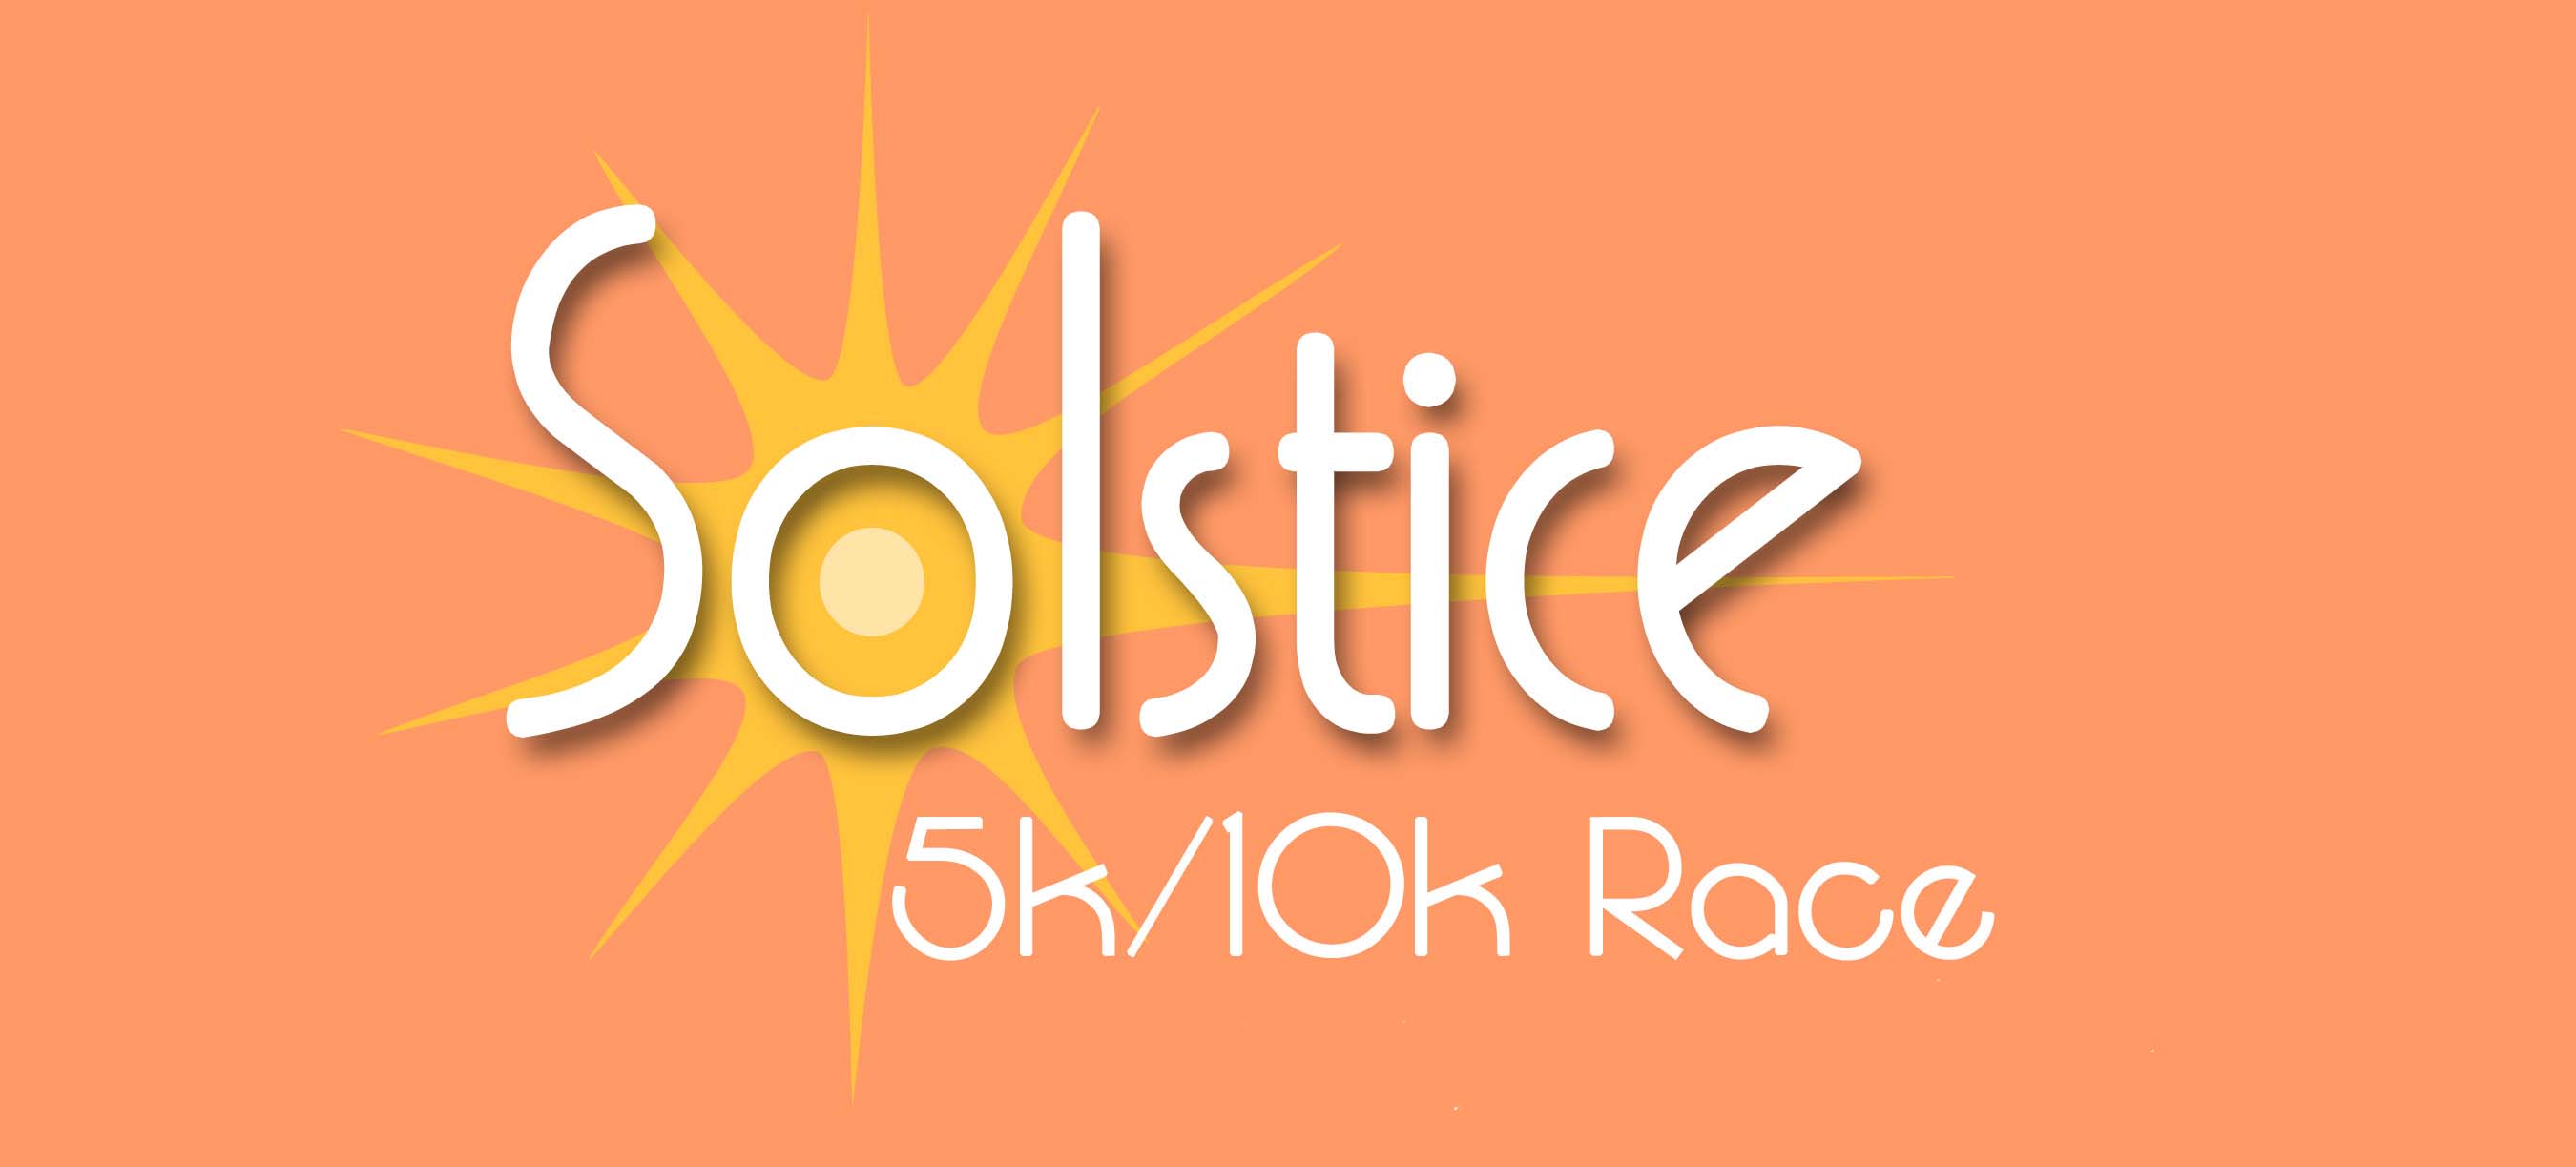 Register for 2015 Solstice 1 Mile Fun Run